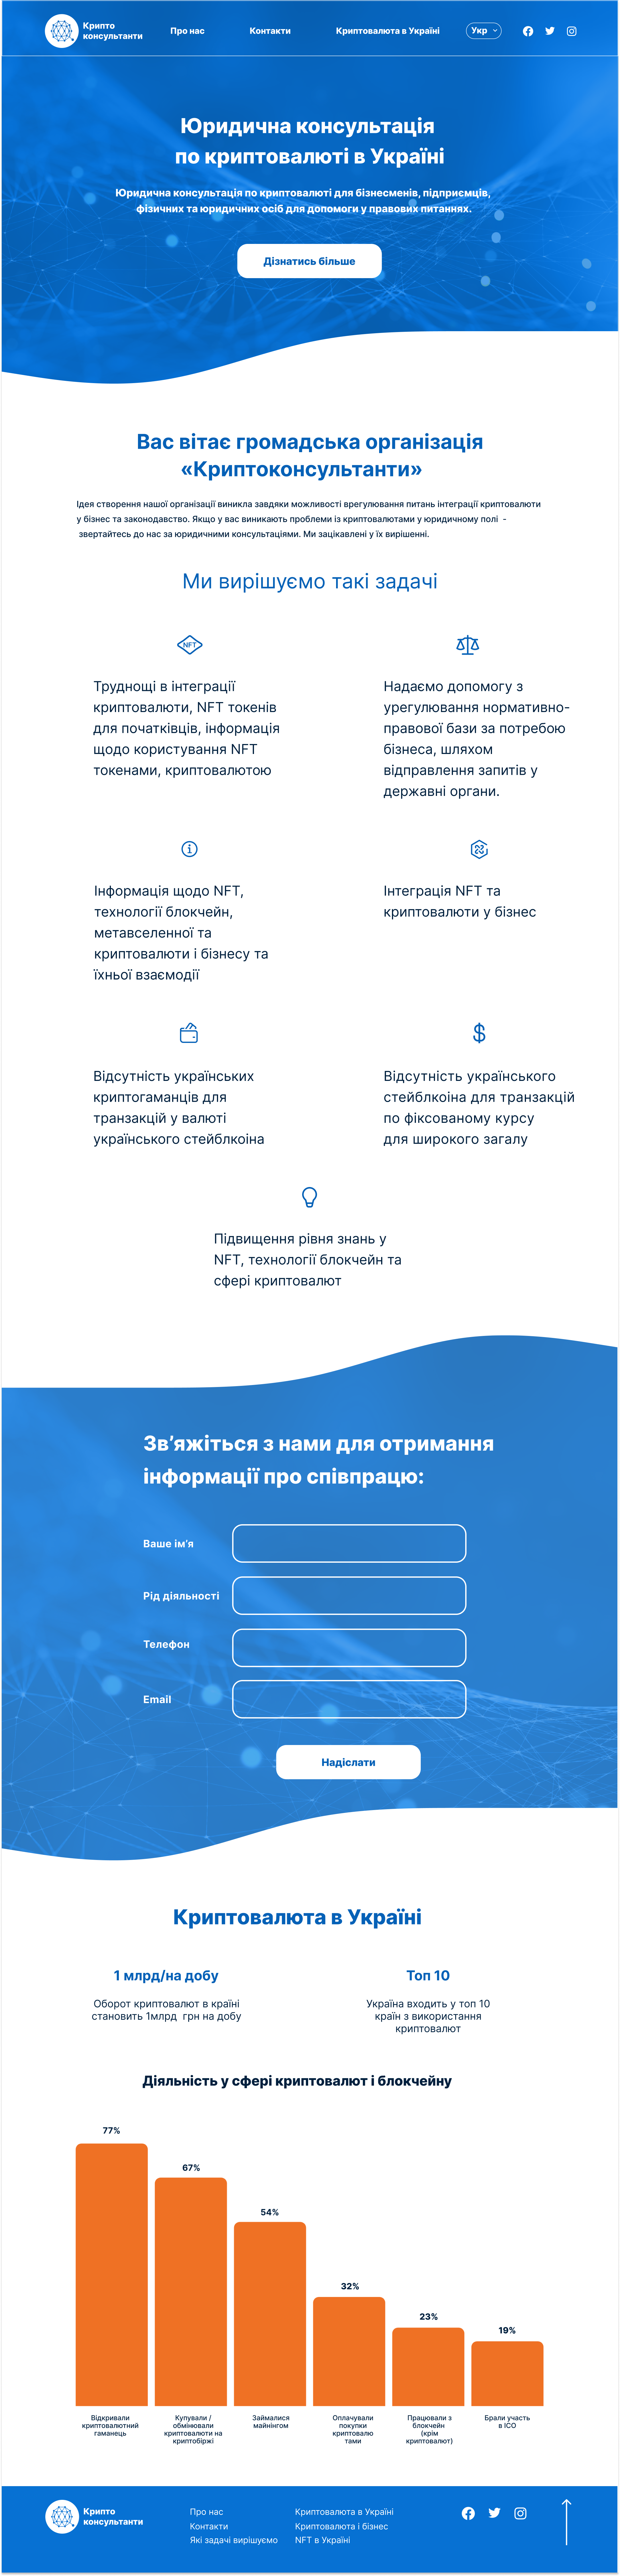 Landing page for a Ukrainian organization 